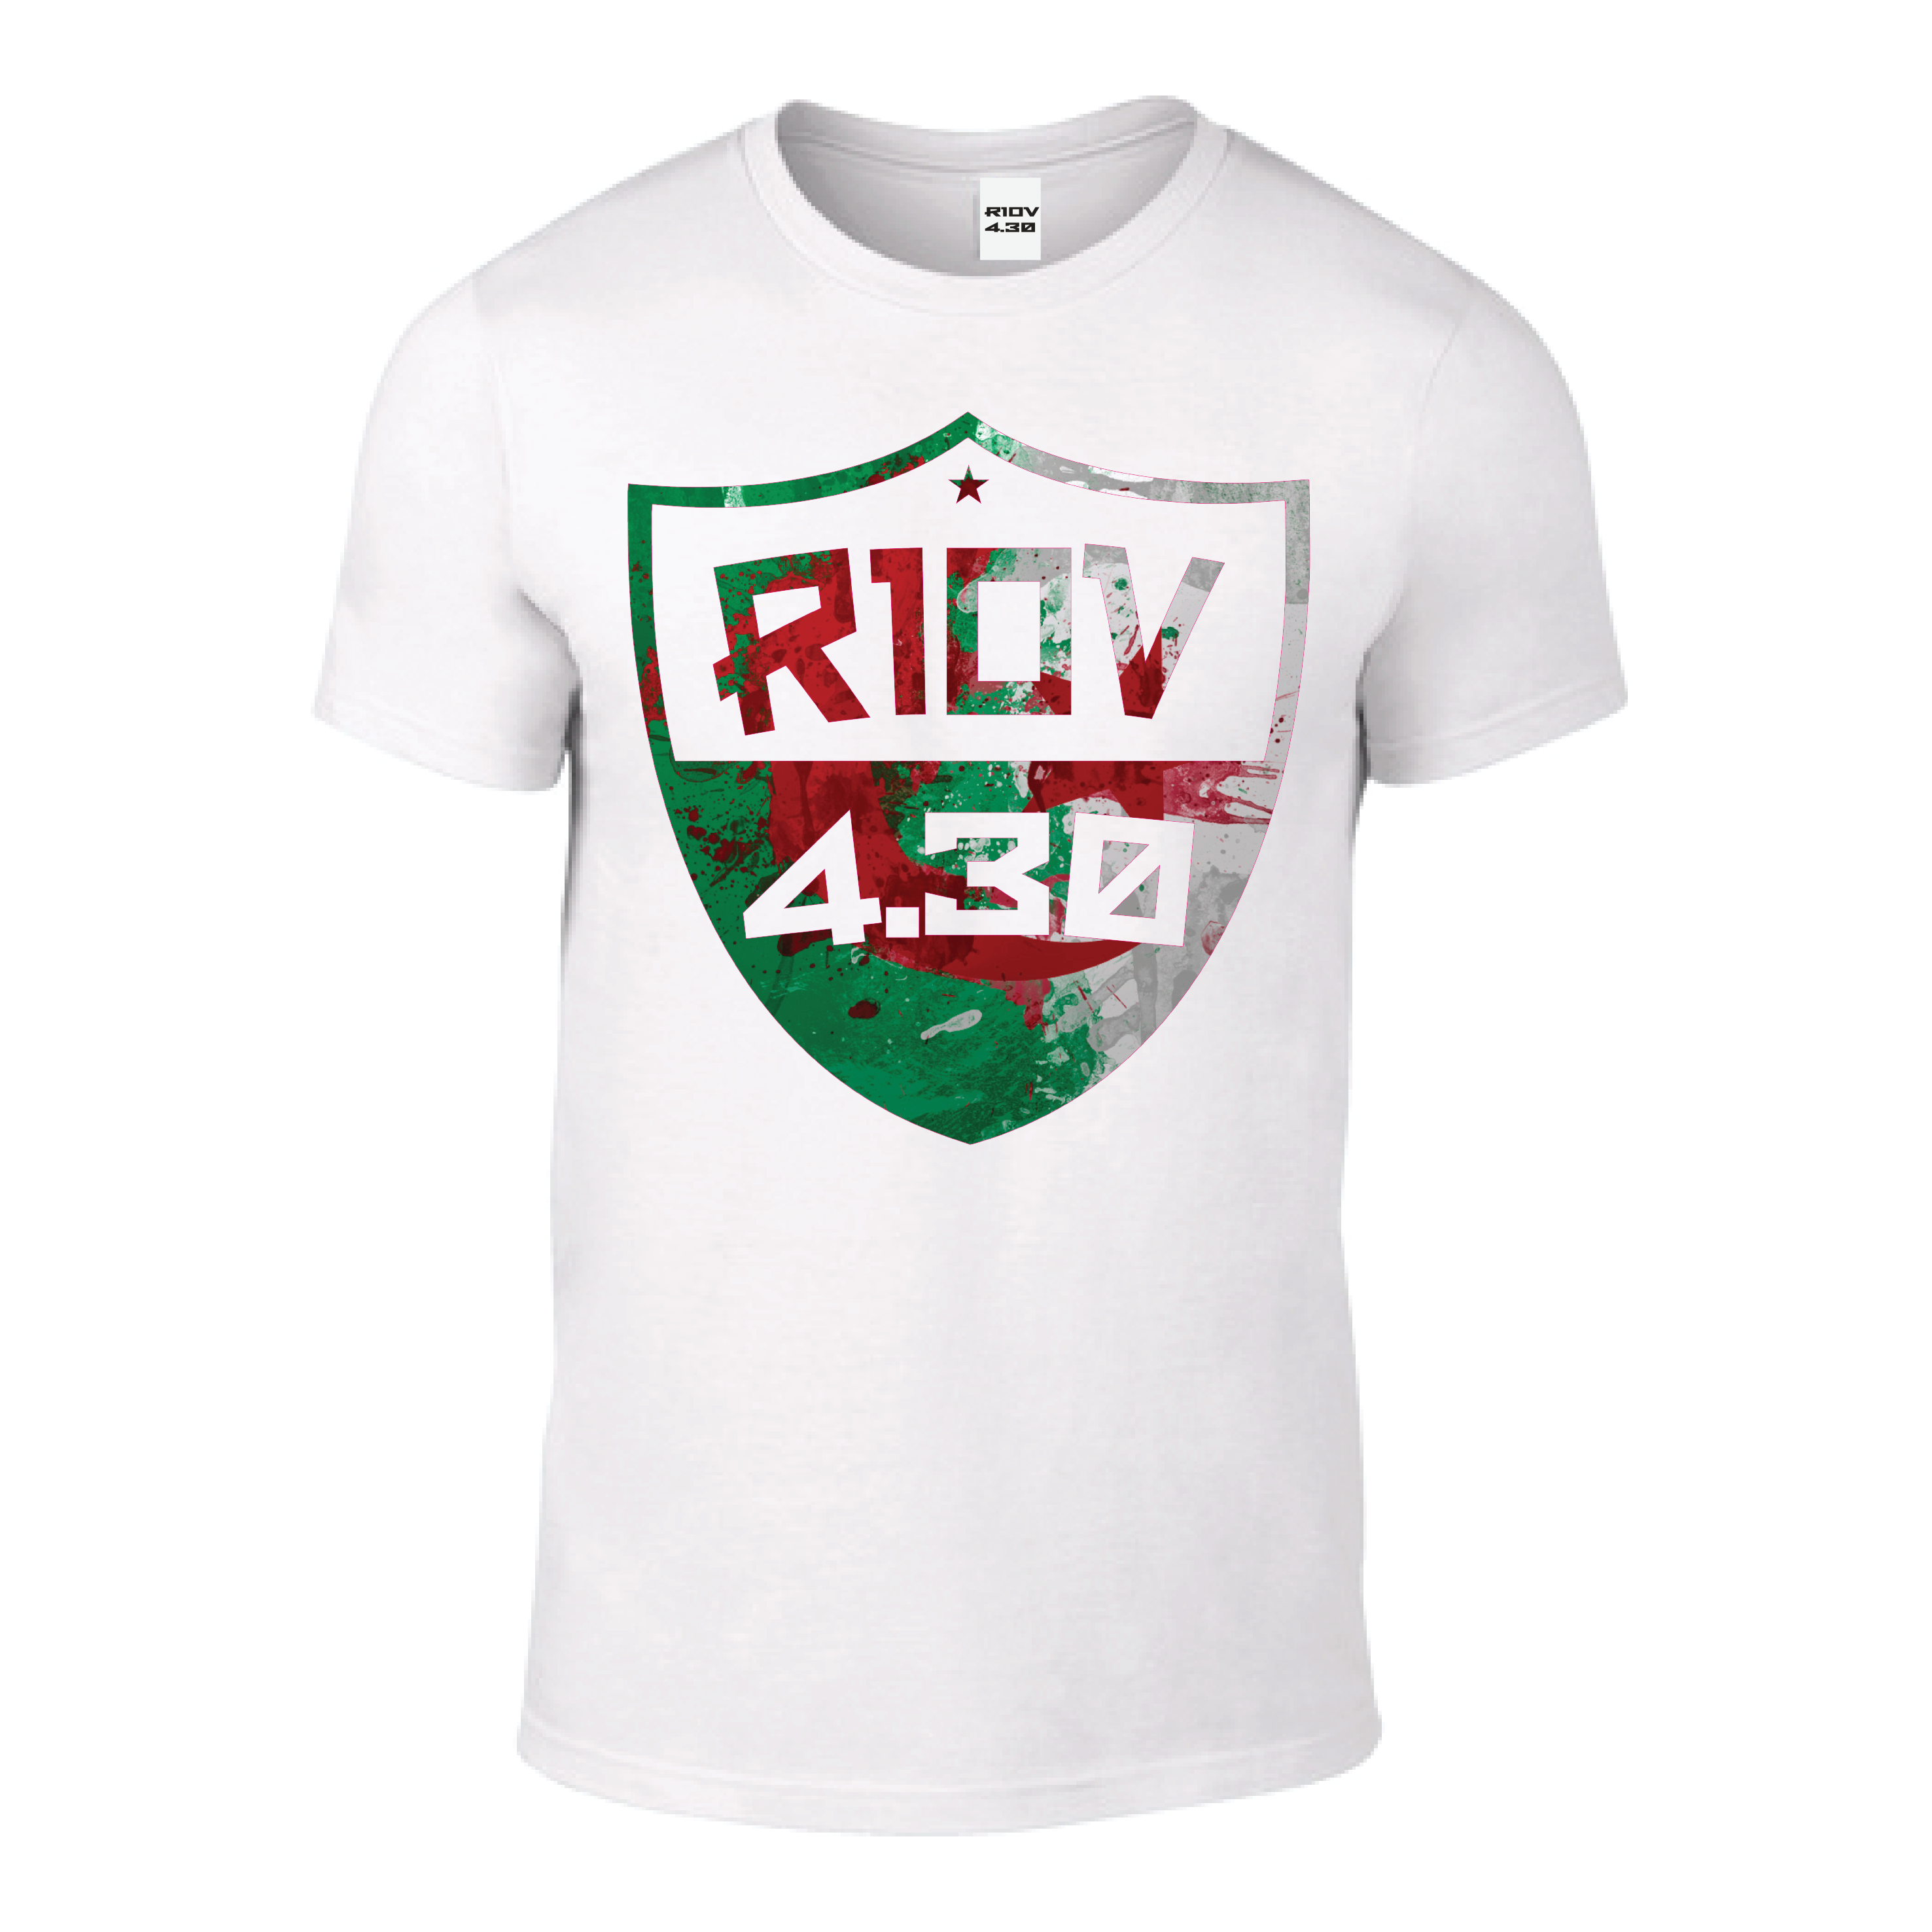 Riov 4.30 Nation Algerie